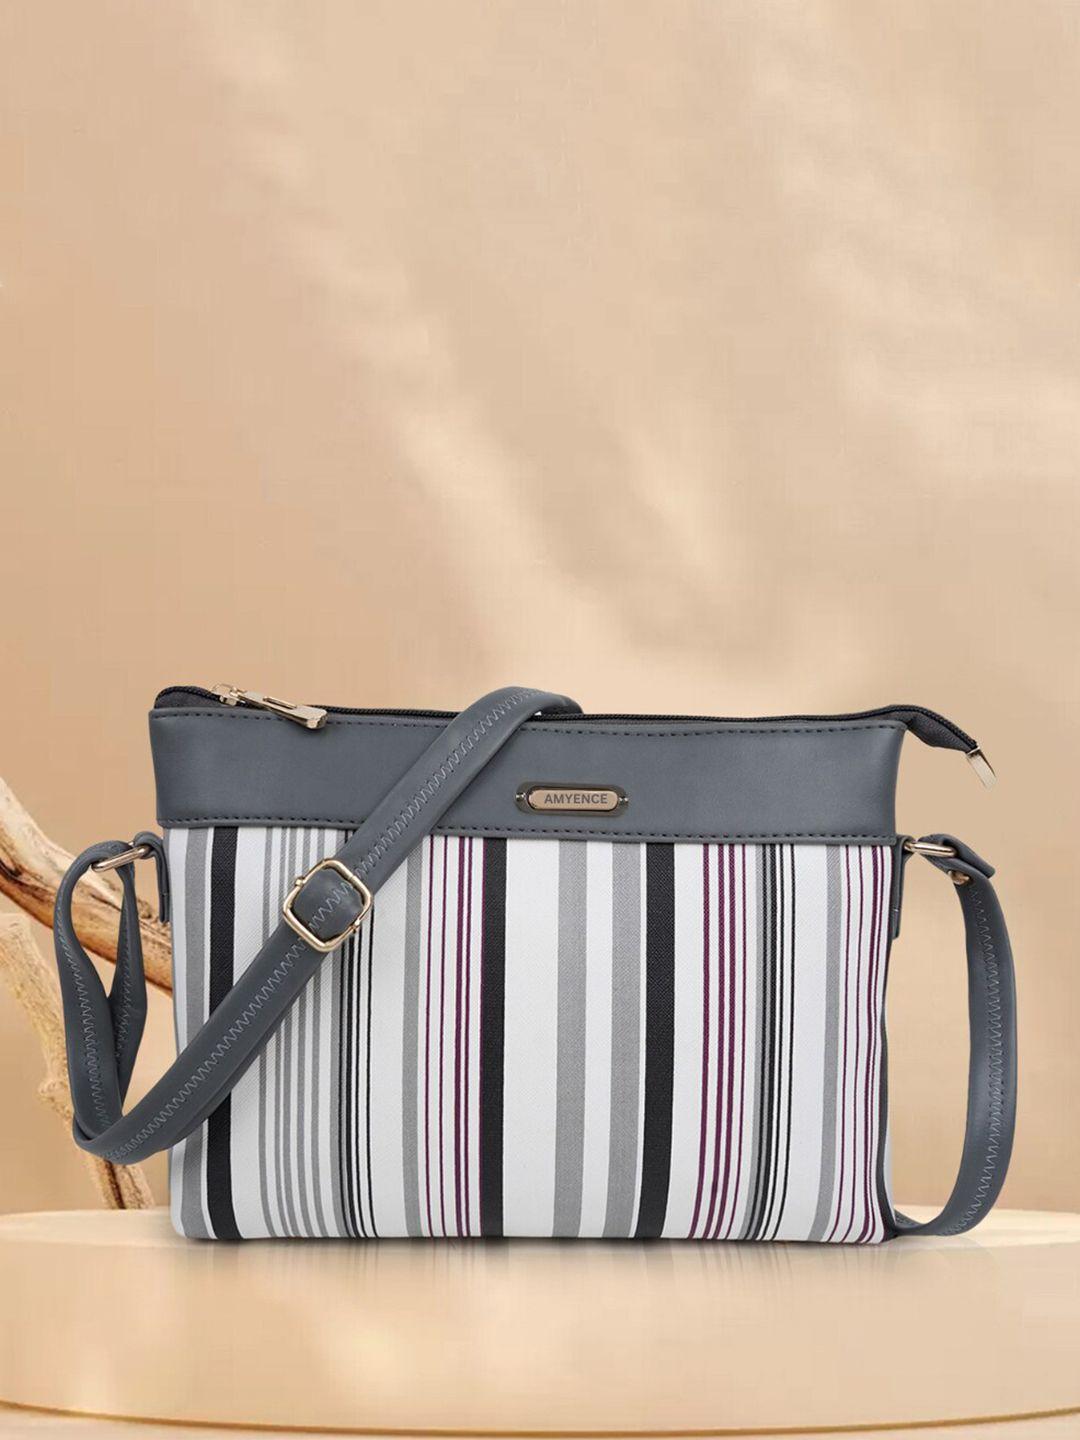 amyence striped sling bag